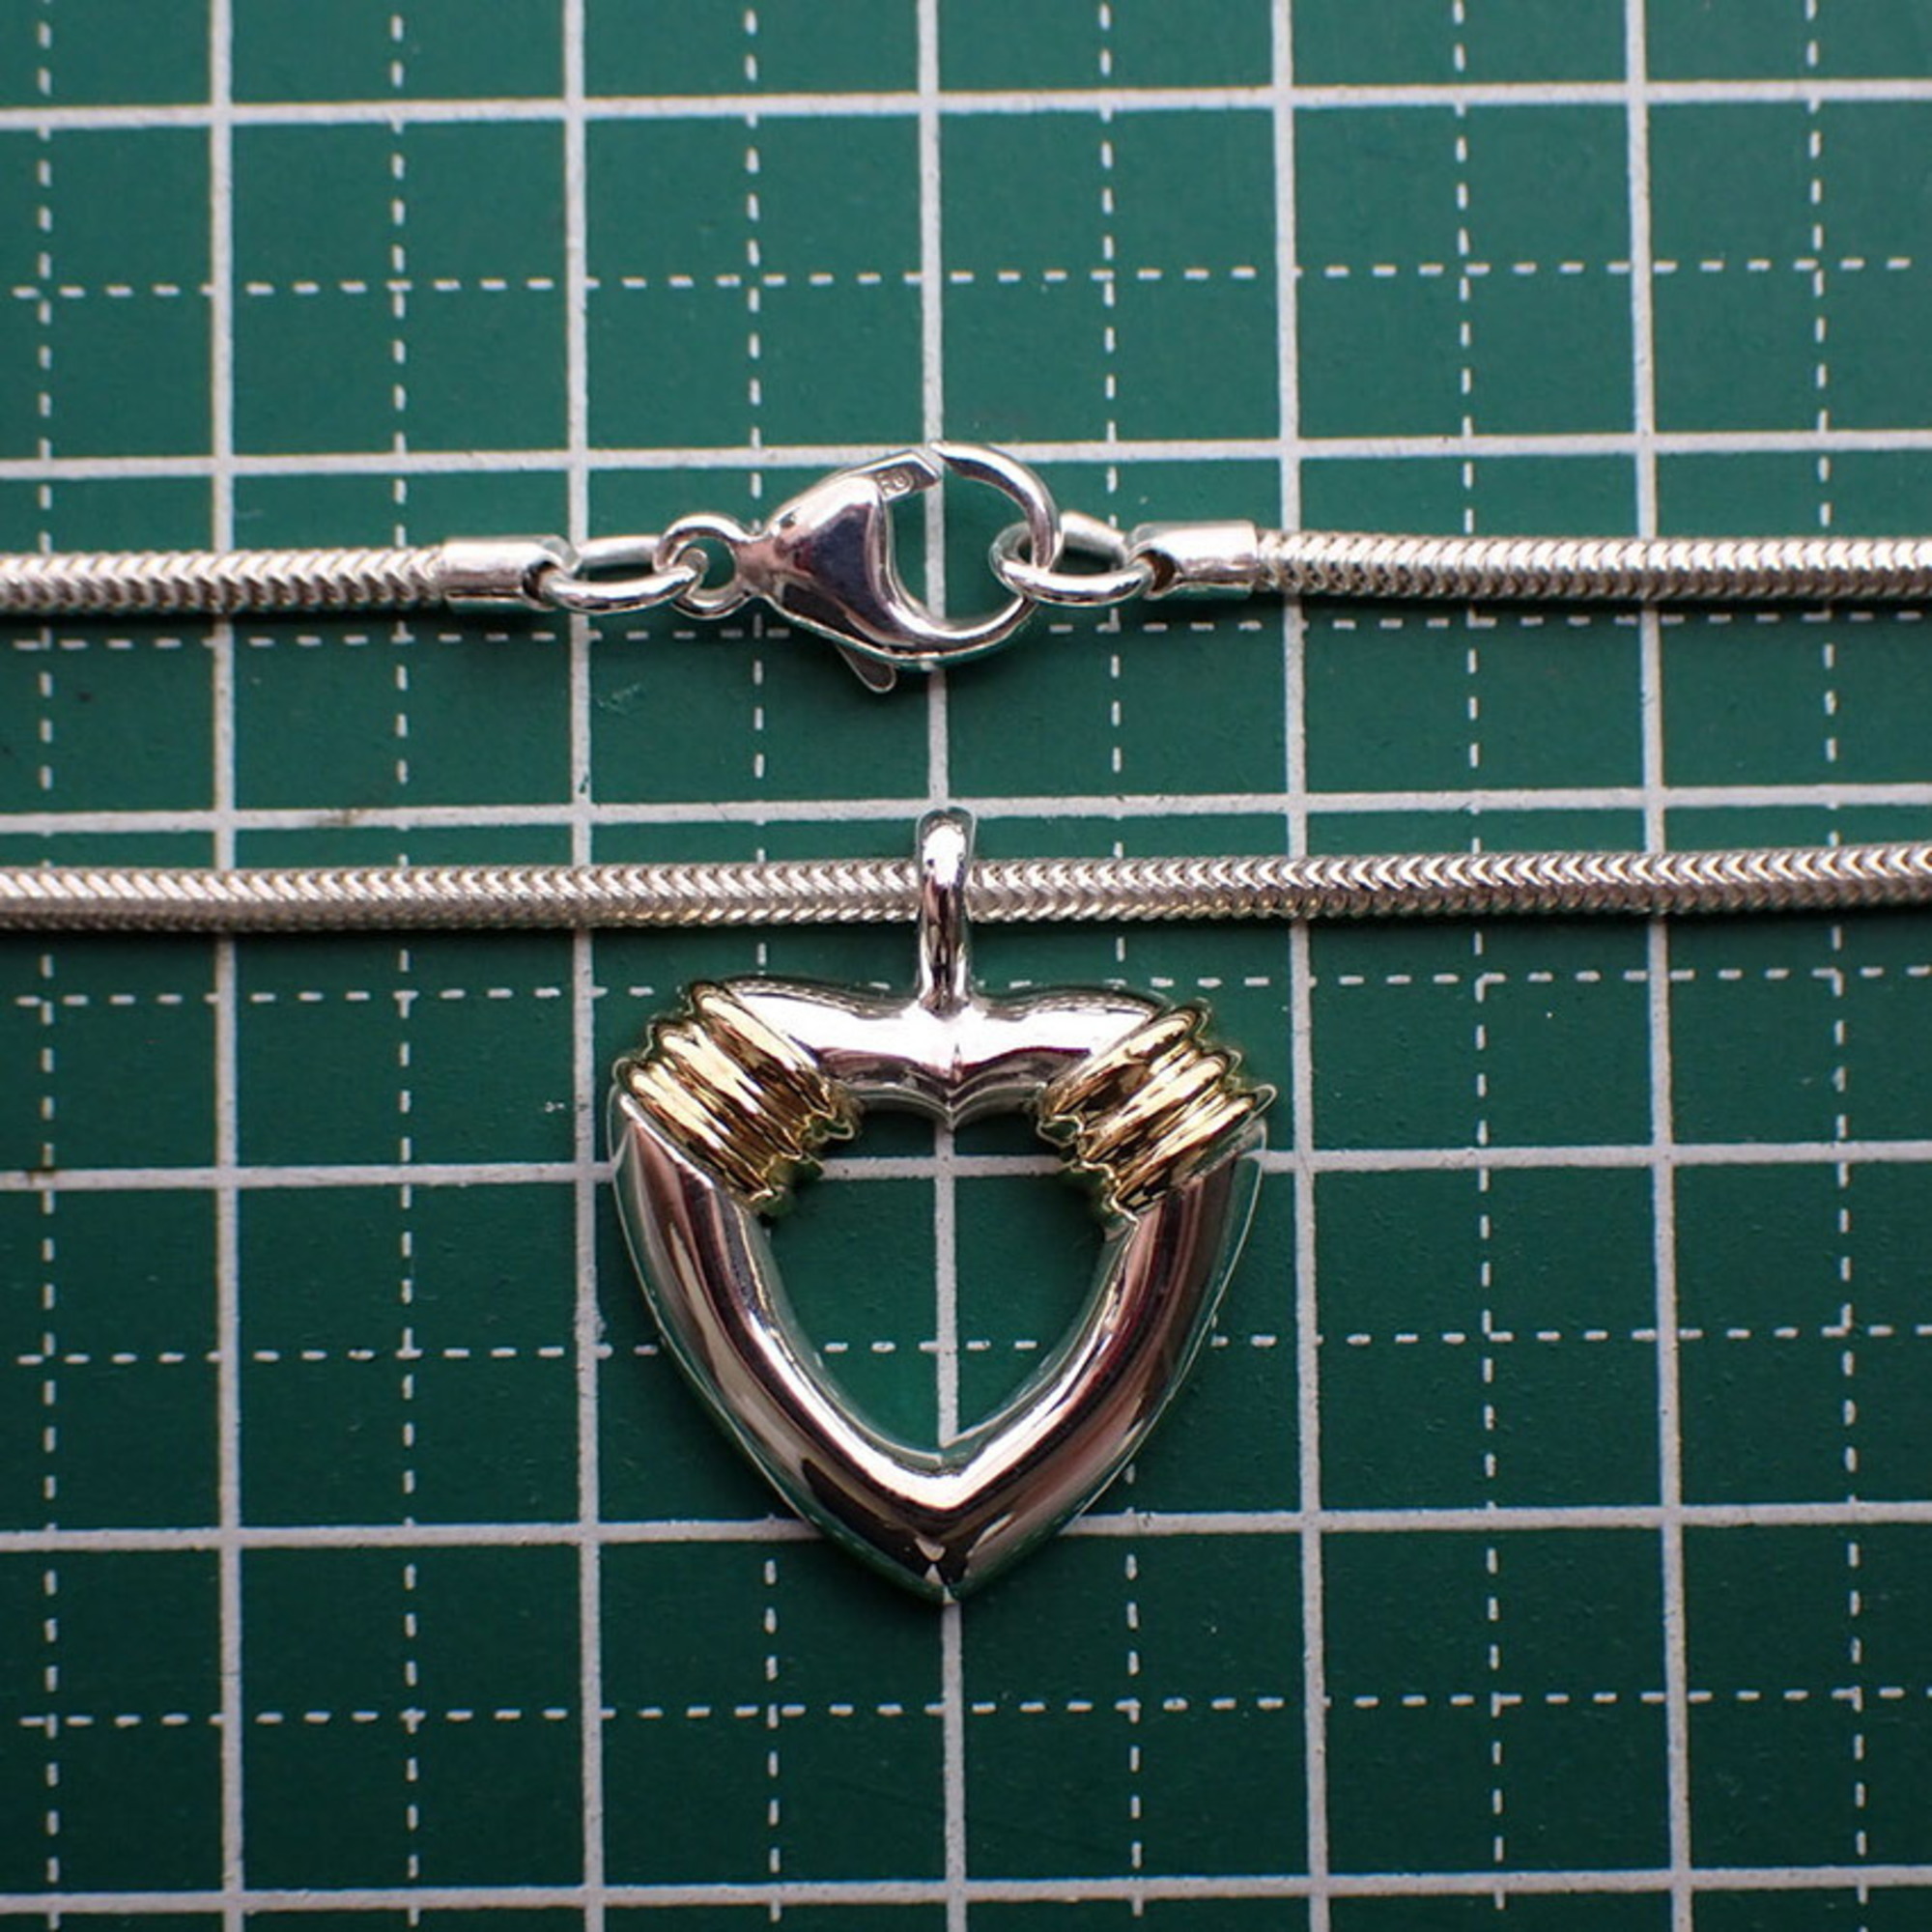 TIFFANY 925 750 combination heart & coil pendant